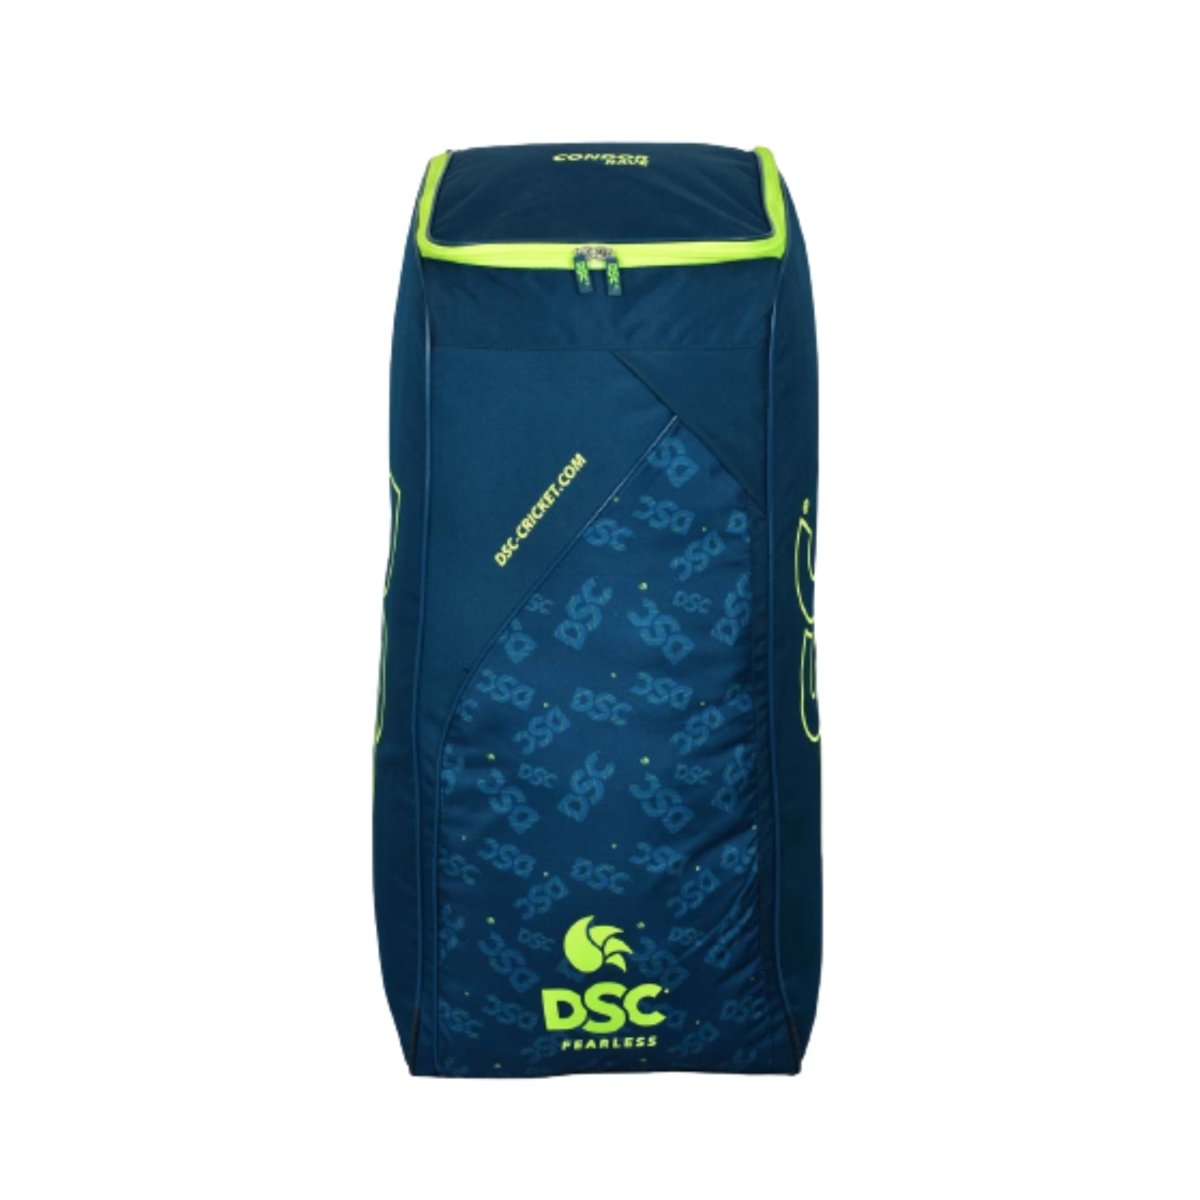 DSC Condor Rave Cricket Wheelie Kit Bag.